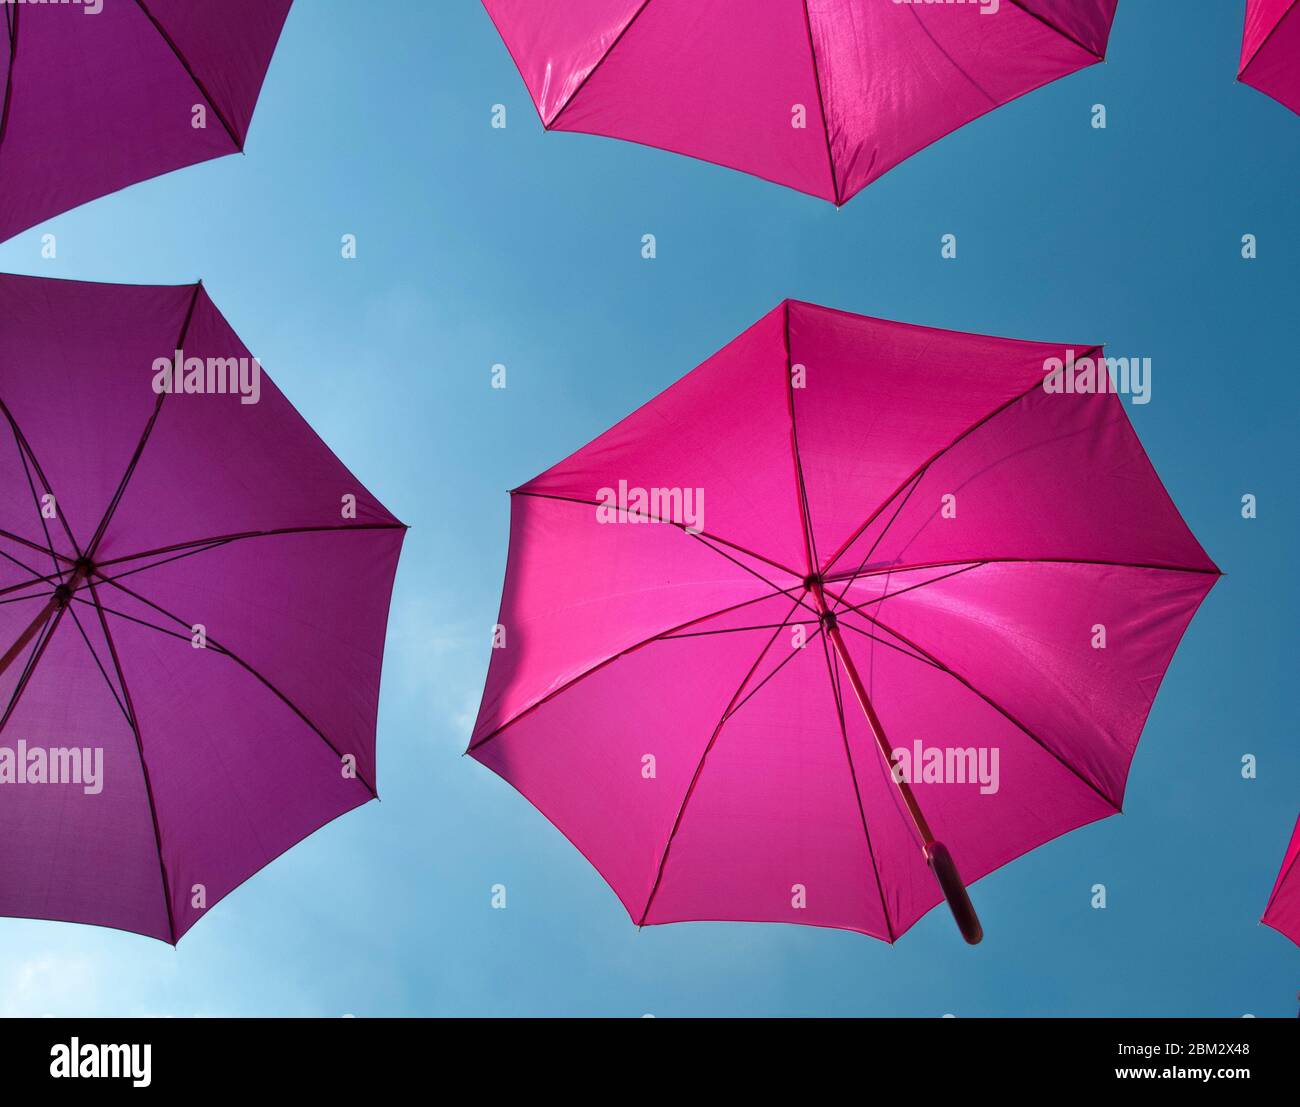 Pink umbrellas street art installation Stock Photo